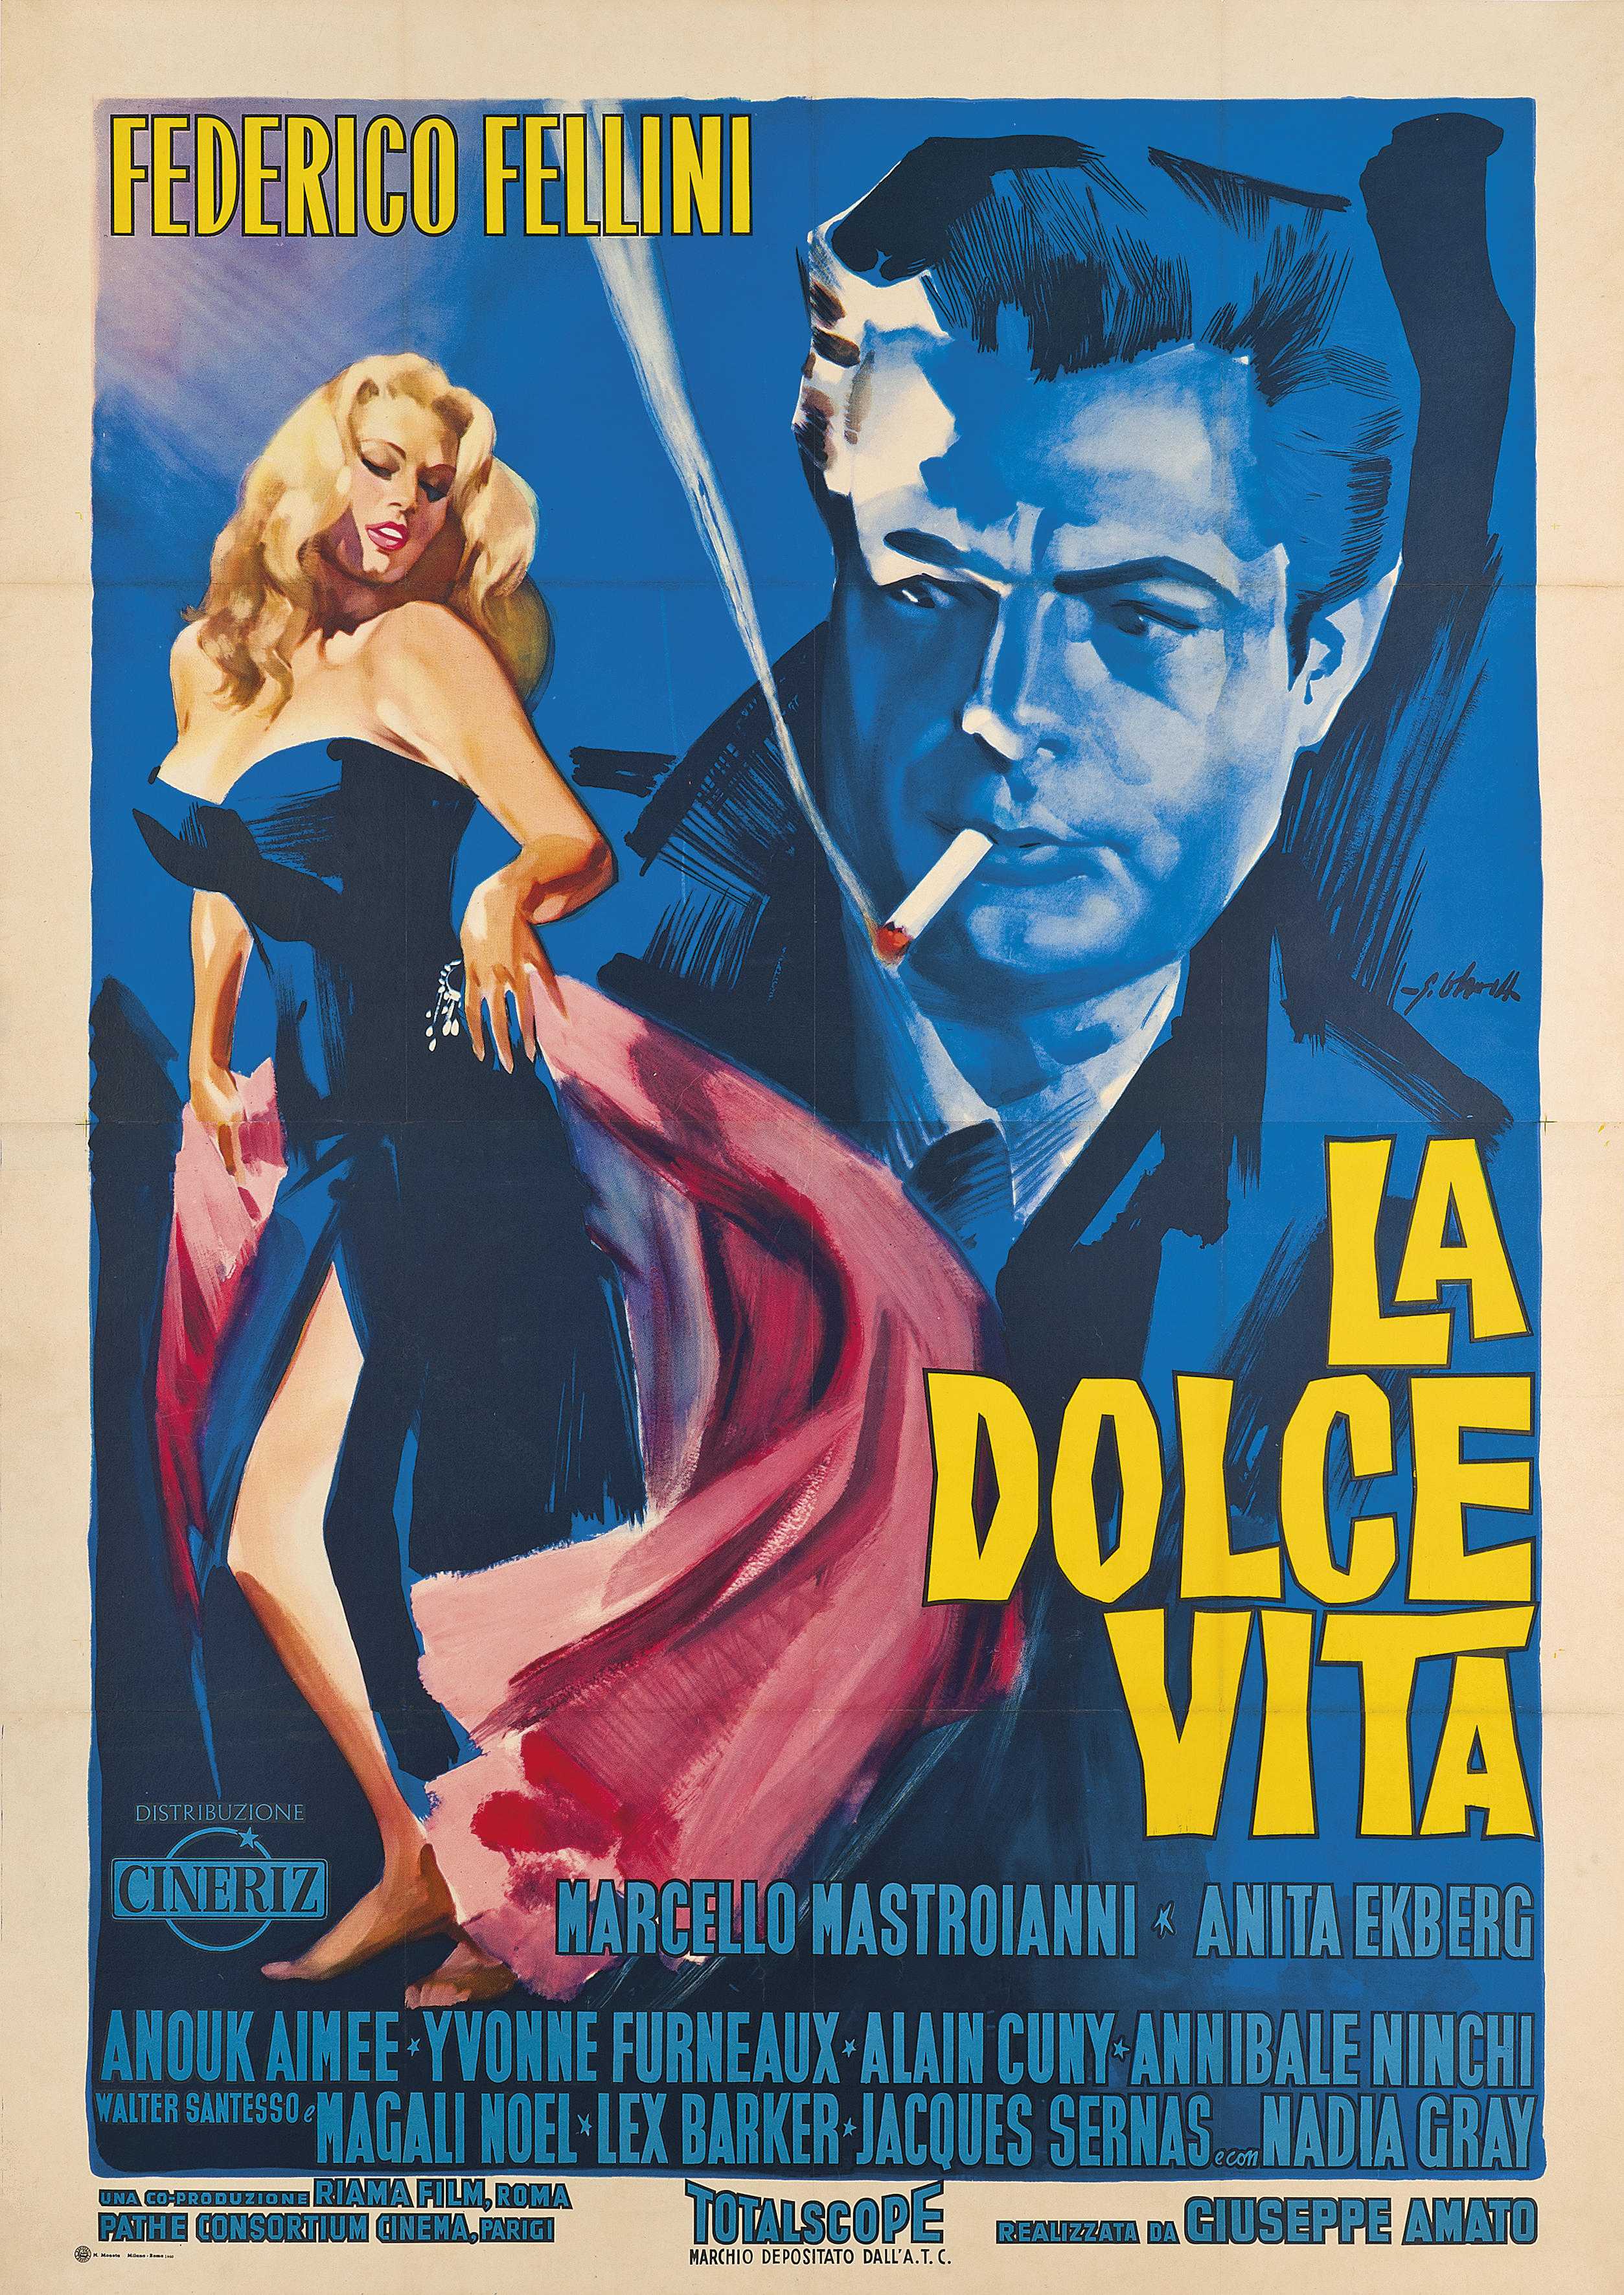 Film poster for Federico Fellini